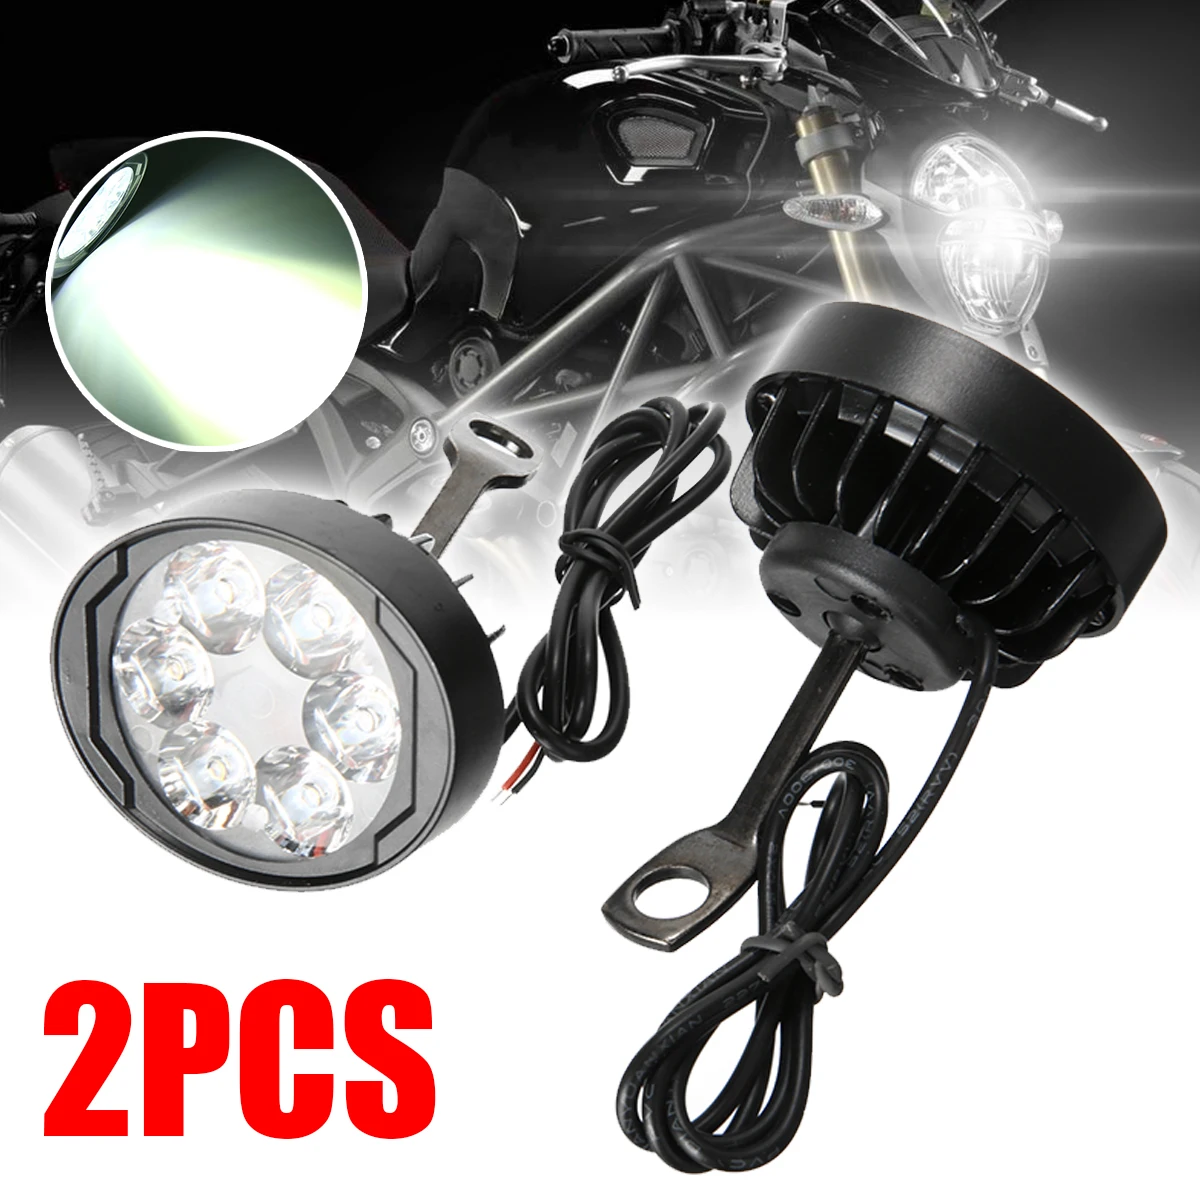 

2x 6LED Мотоцикл головной светильник 12 Вт AC/DC 12V супер яркий фонарь пятно света белый рабочий светильник внутреннего накопителя для мотоциклов ...